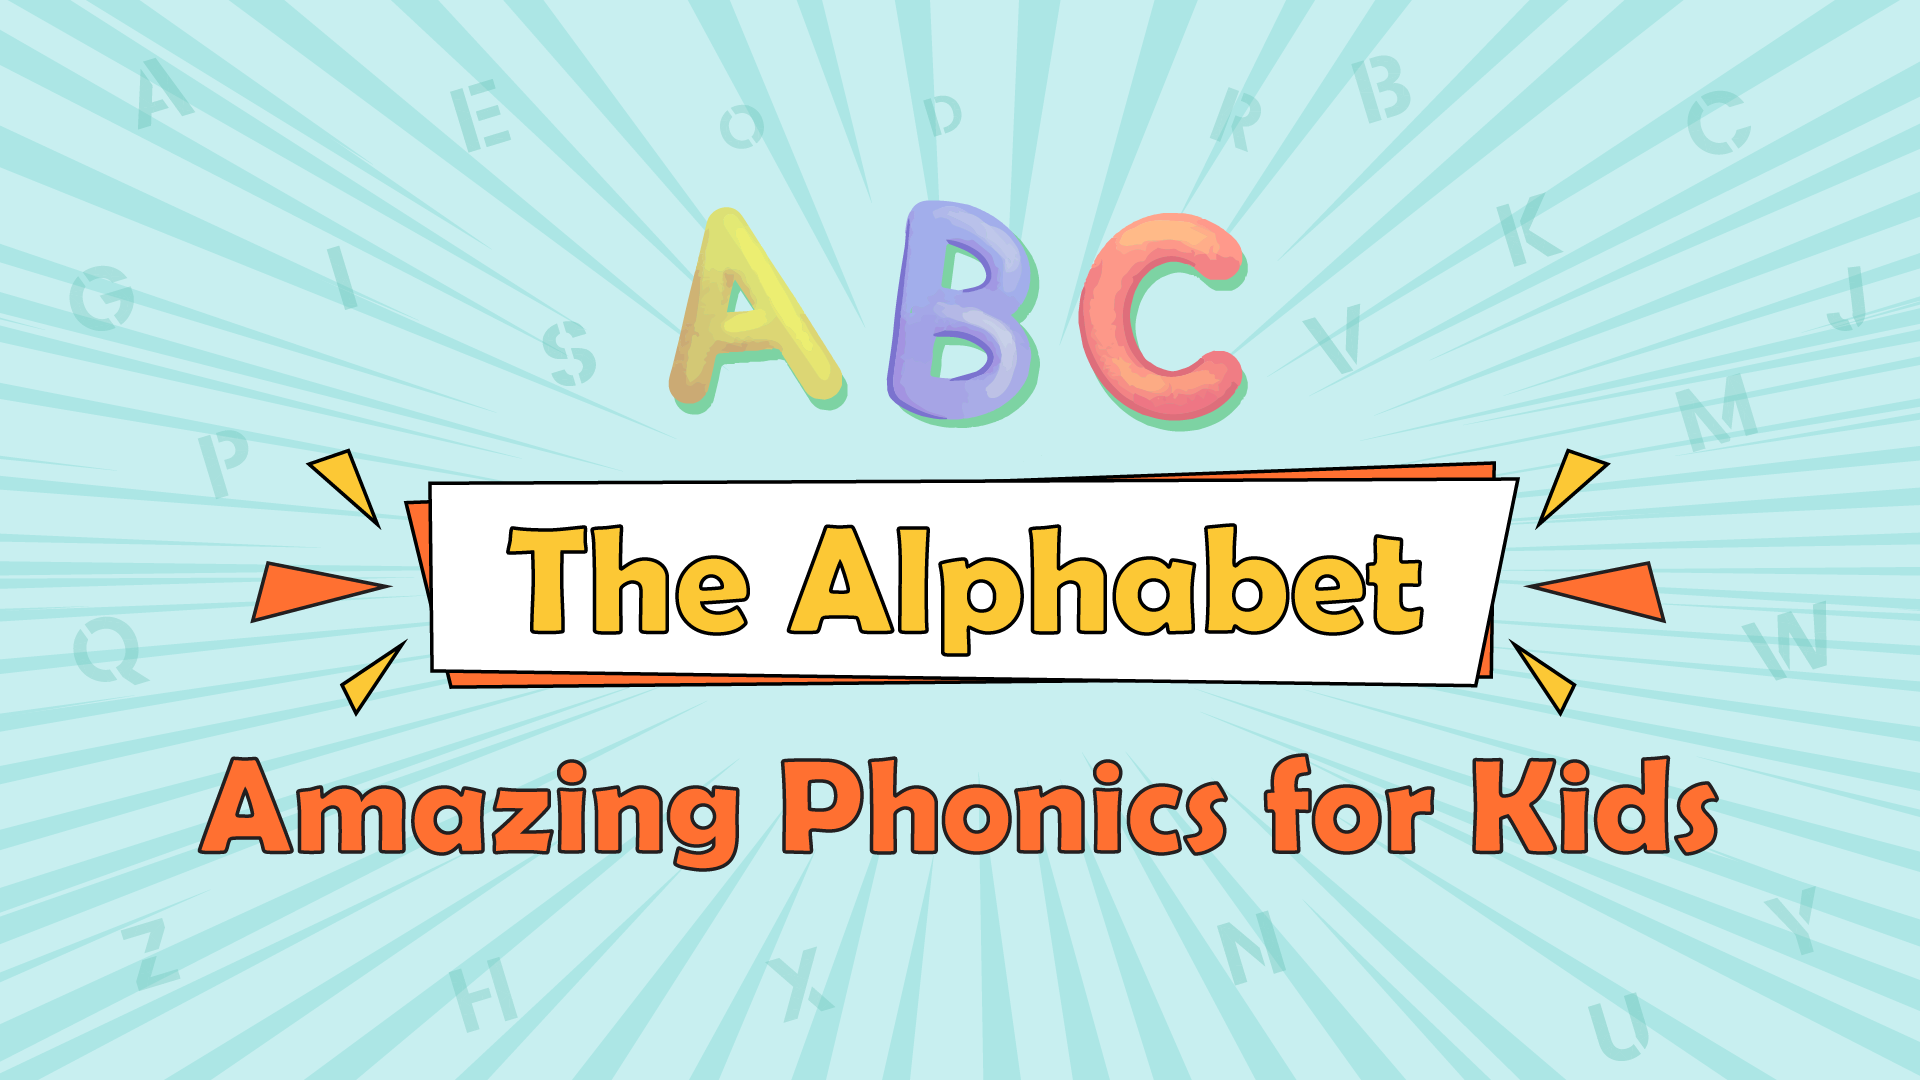 The ABCs- The Alphabet- Amazing Phonics for Kids